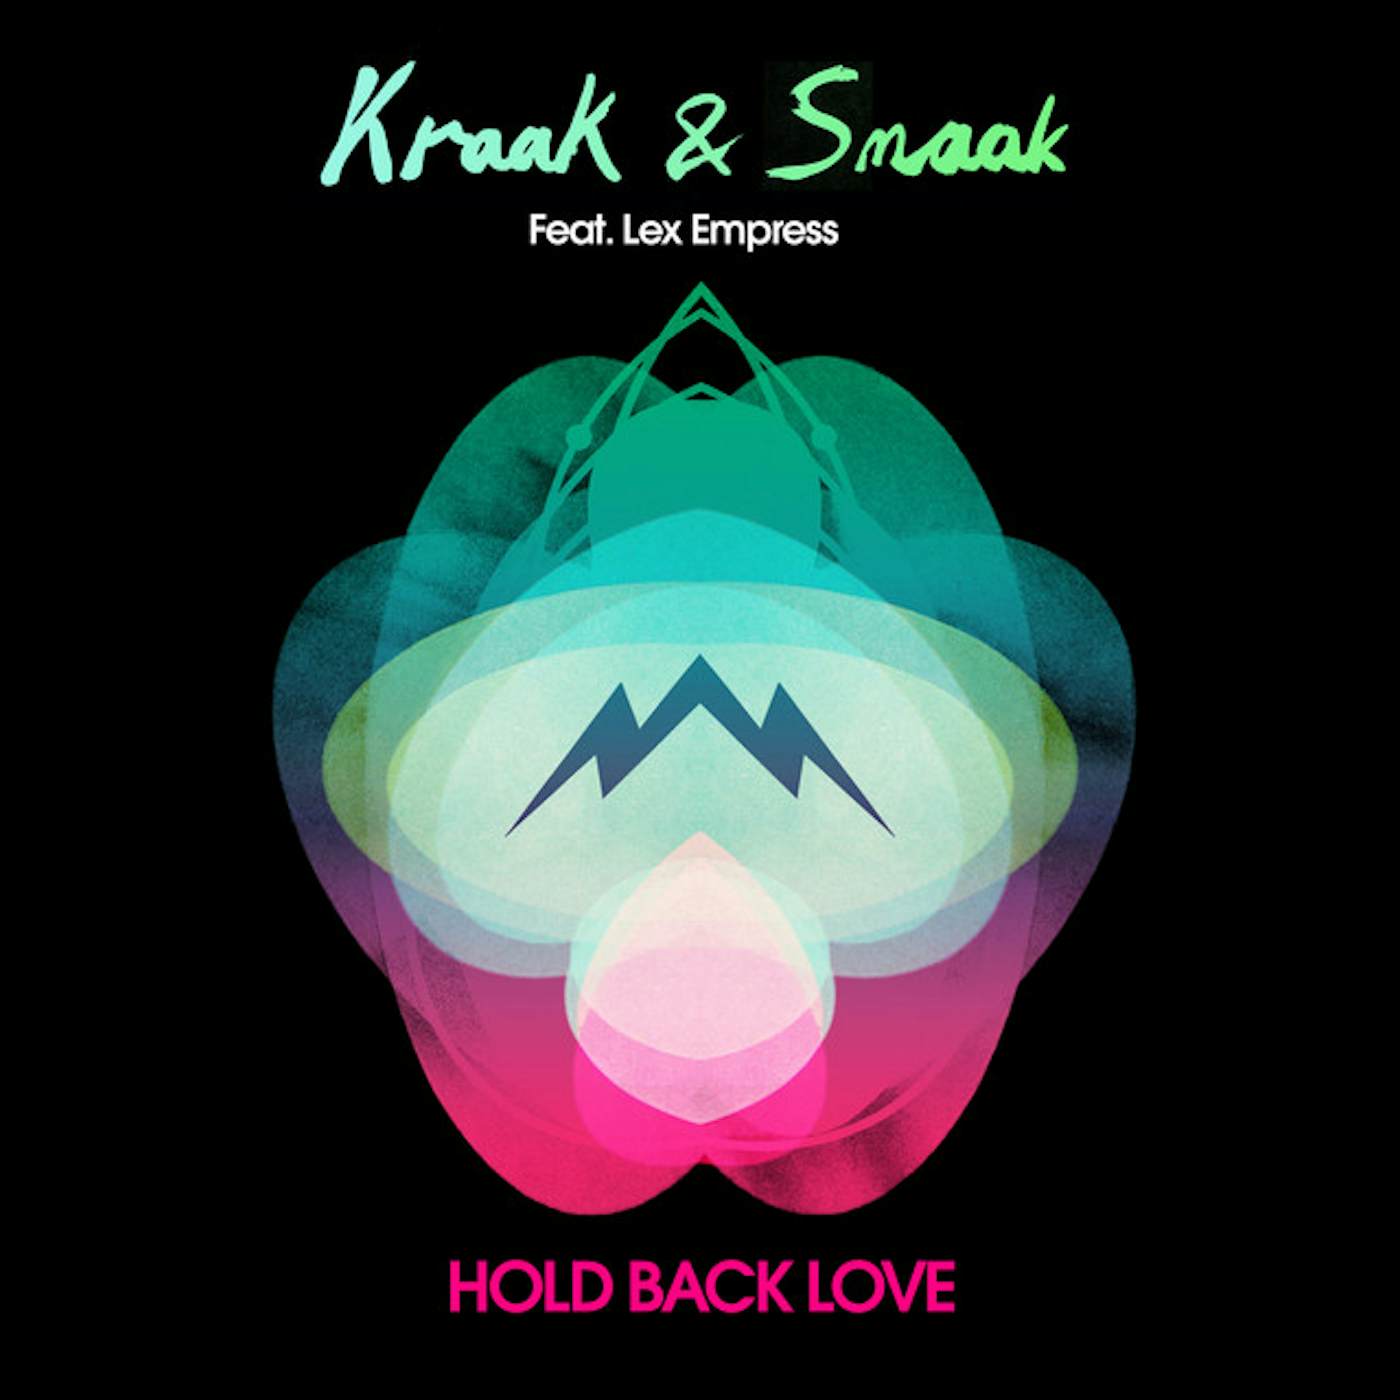 Kraak & Smaak HOLD BACK LOVE Vinyl Record - UK Release